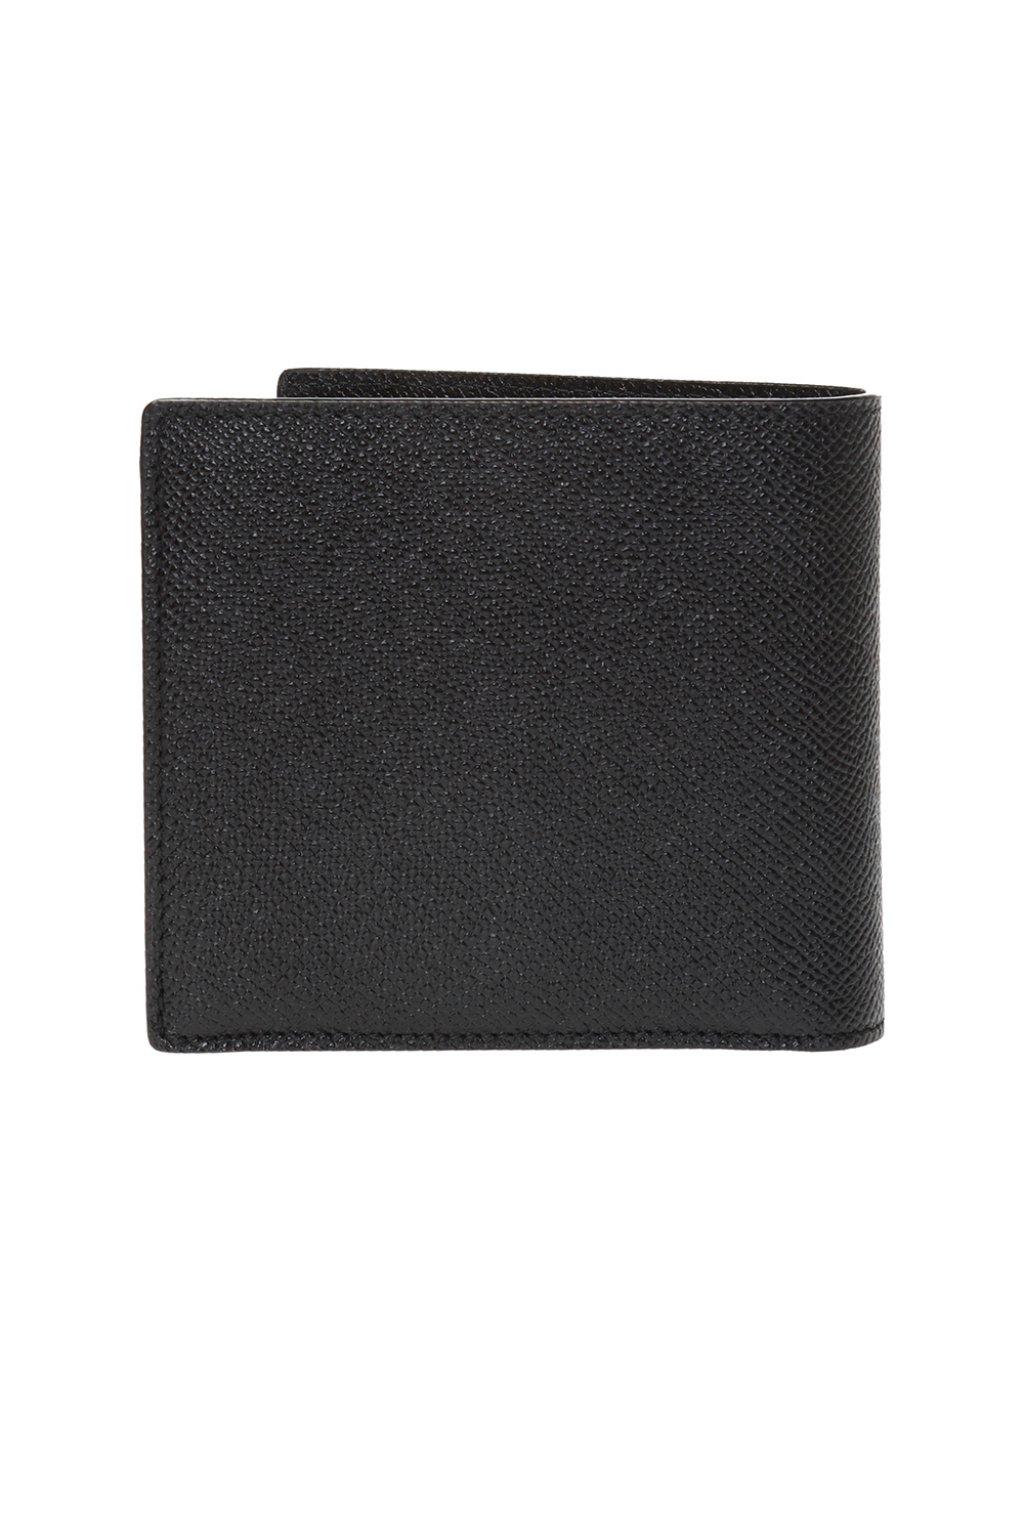 Bally Leather 'byie' Bifold Wallet in Black for Men - Lyst